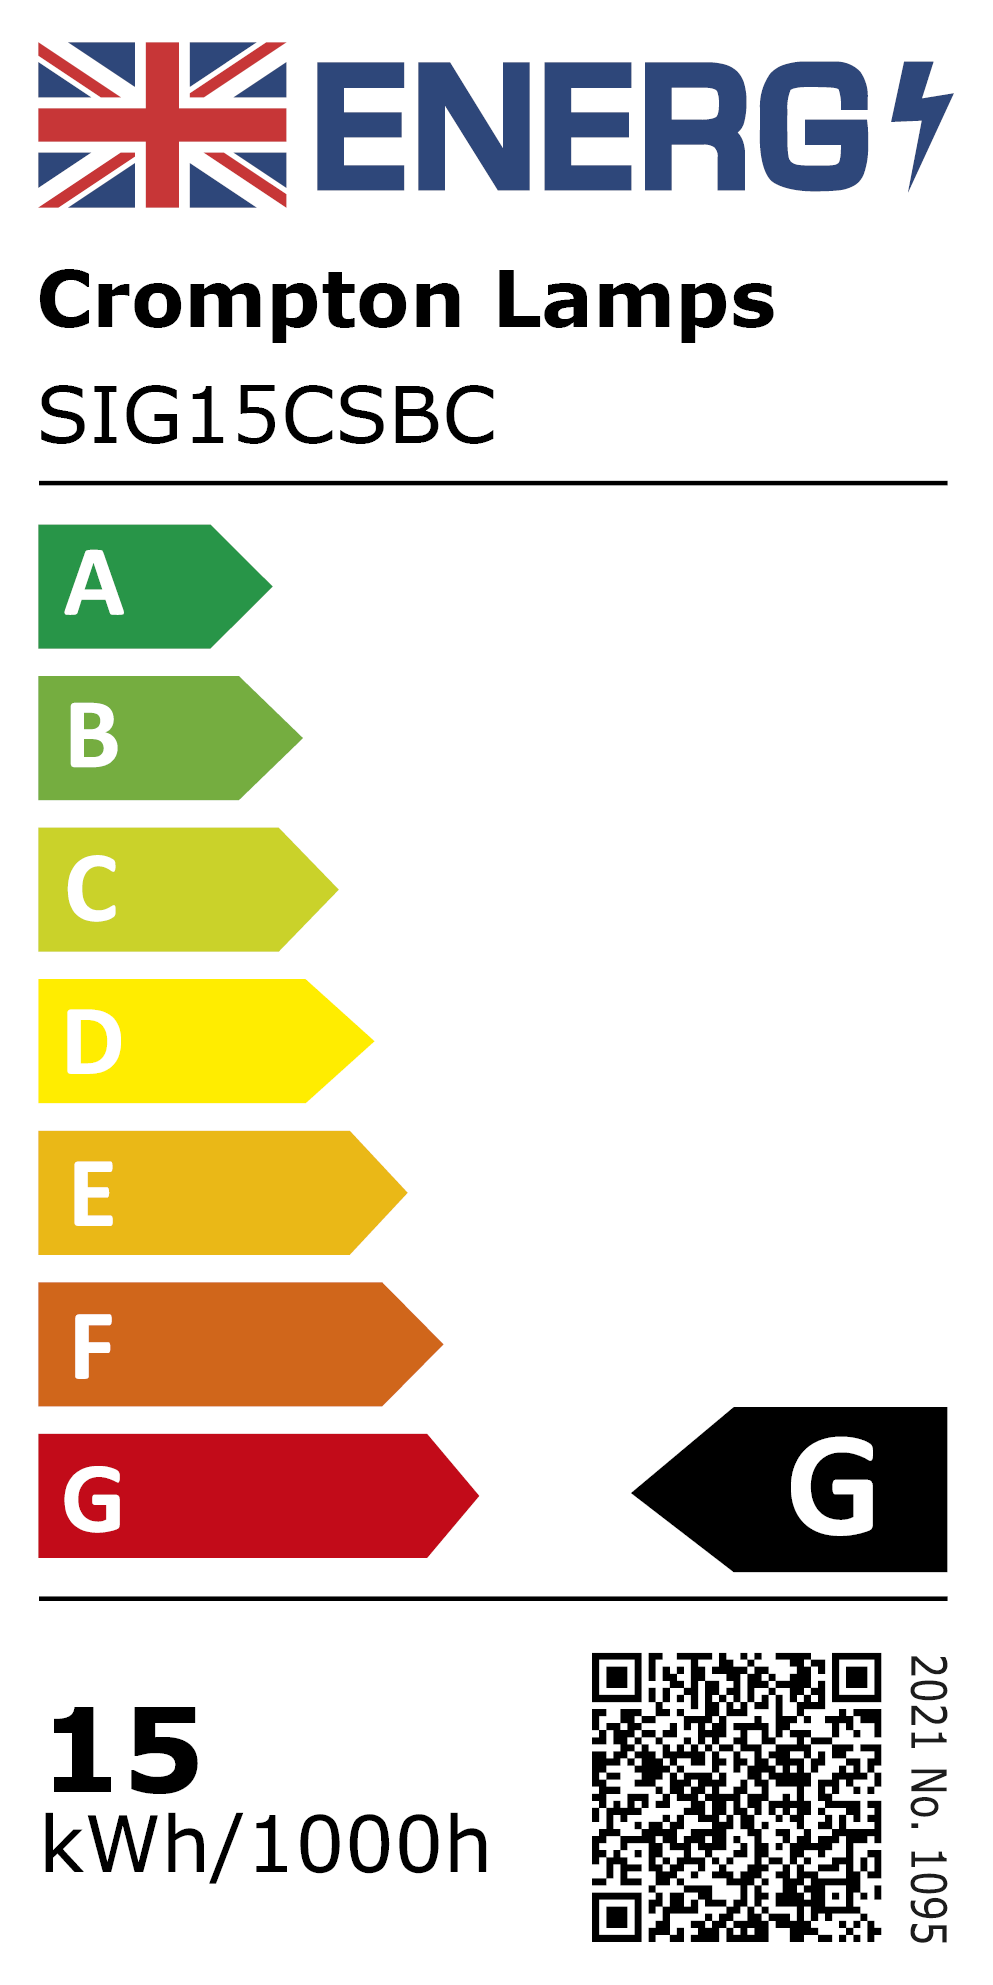 New 2021 Energy Rating Label: Stock Code SIG15CSBC